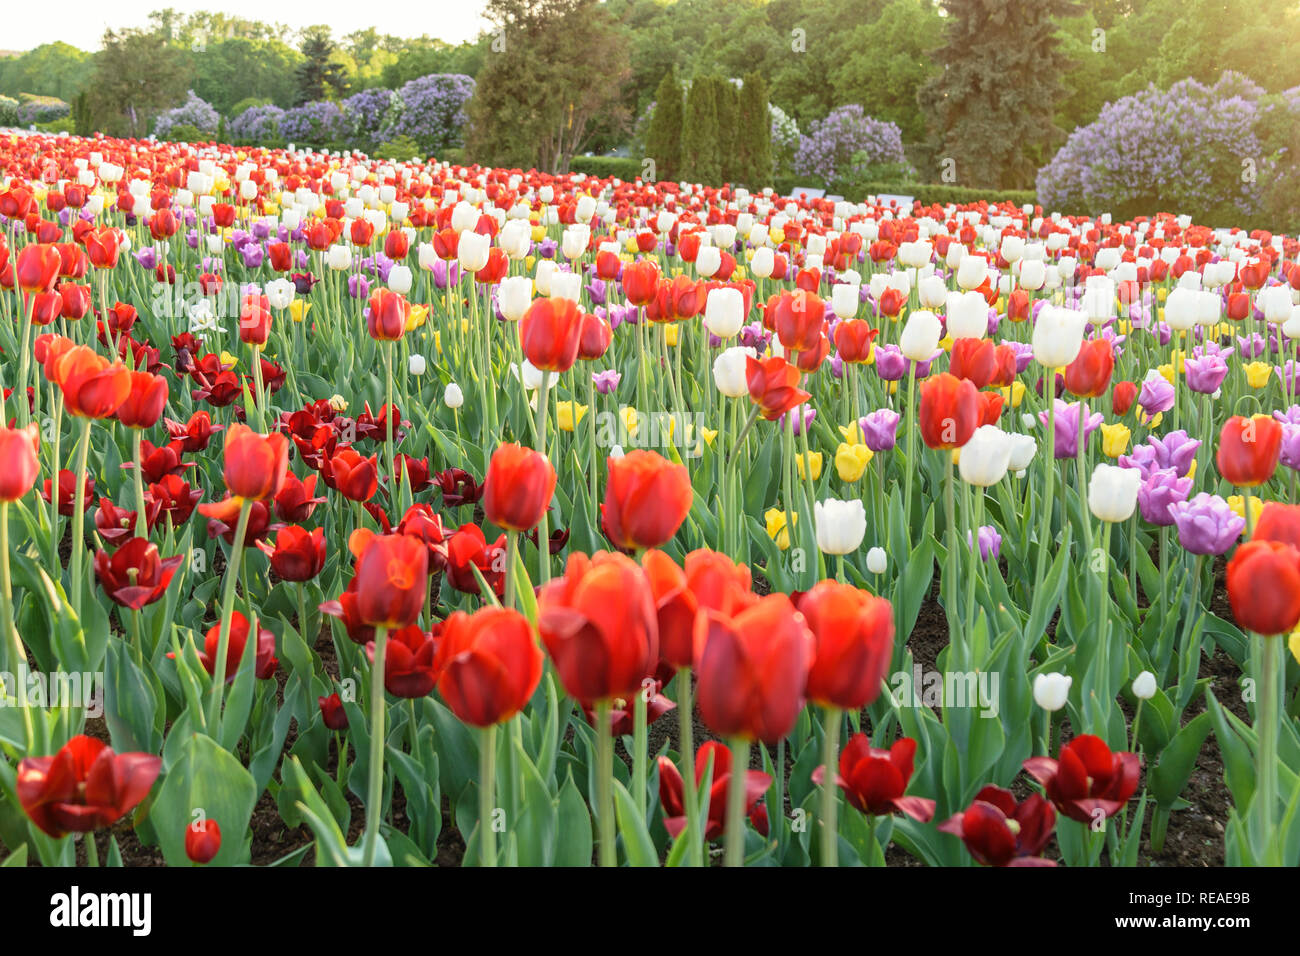 Tulip flower bulb field in the garden, Spring season in Amsterdam Netherlands Stock Photo